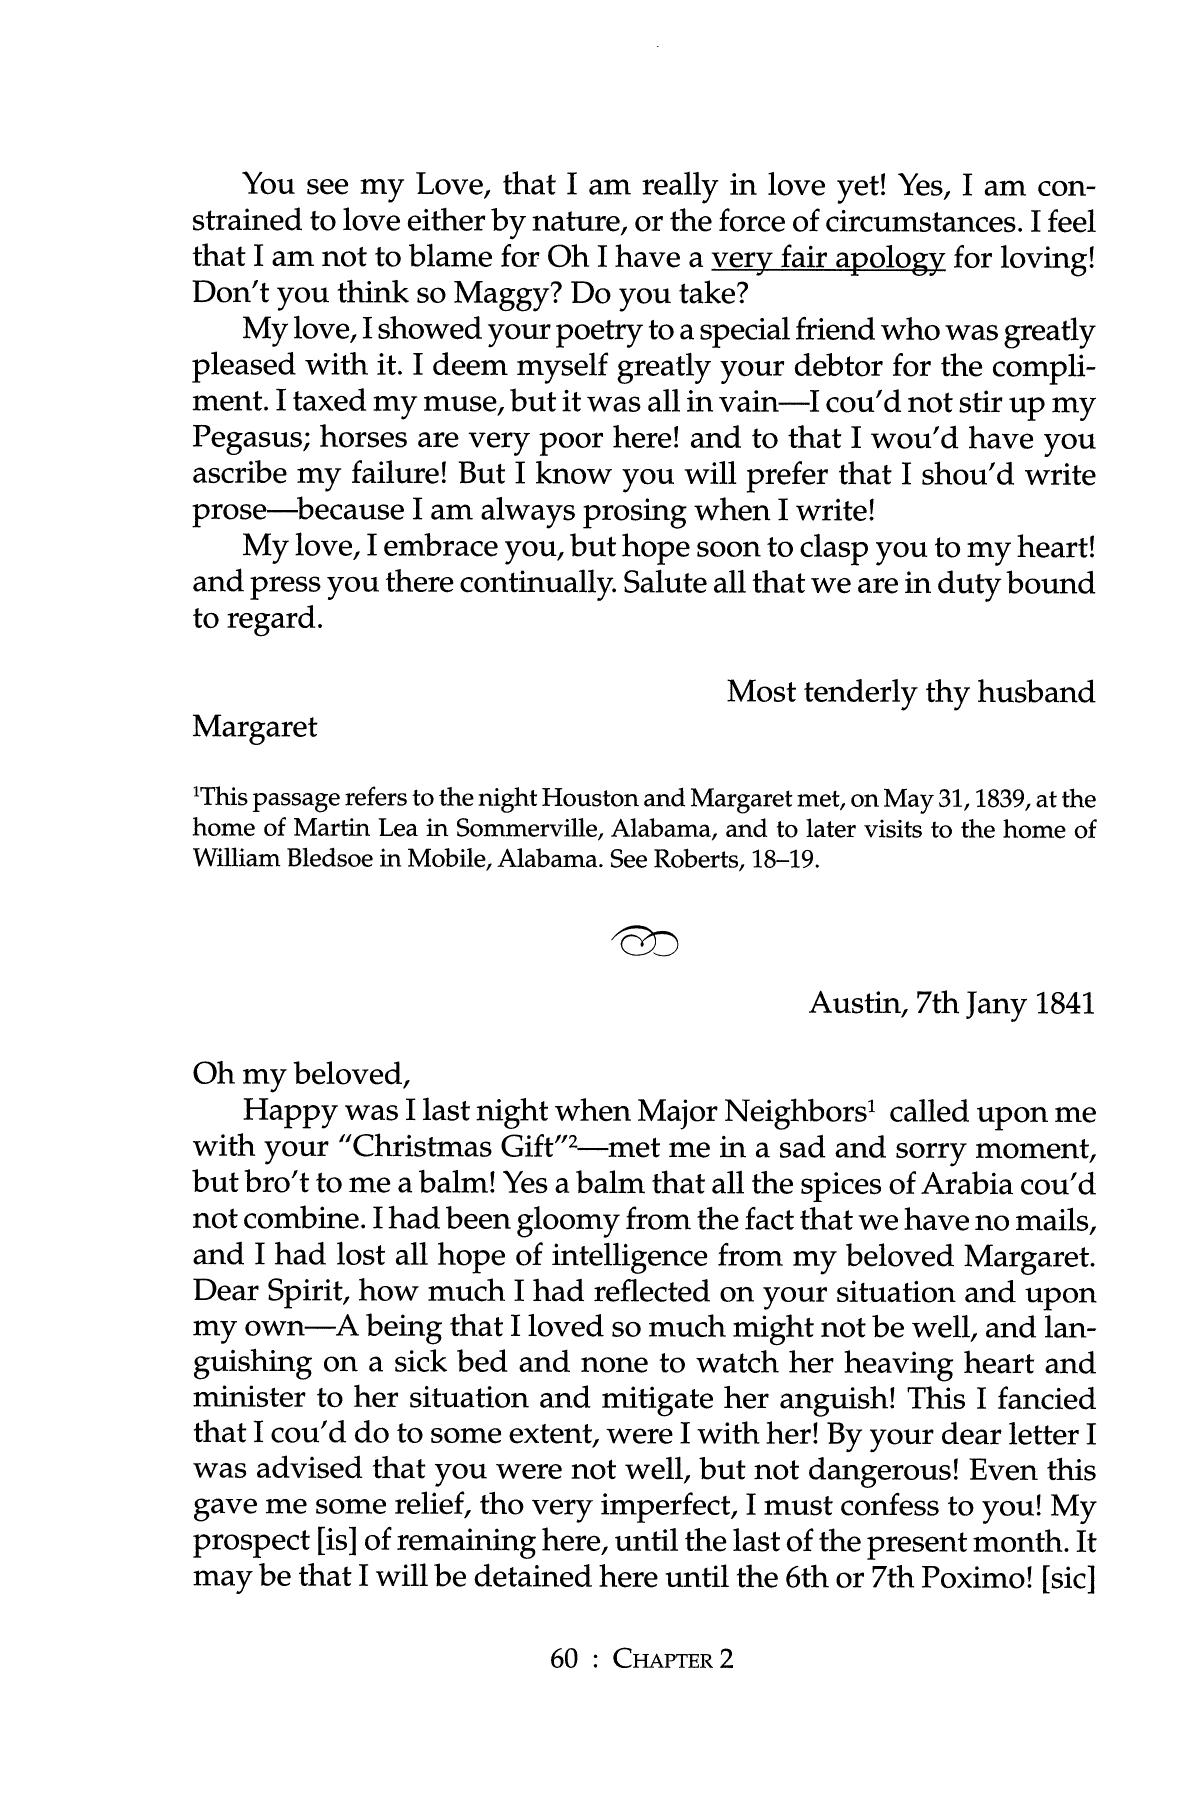 The Personal Correspondence of Sam Houston, Volume 1: 1839-1845
                                                
                                                    60
                                                